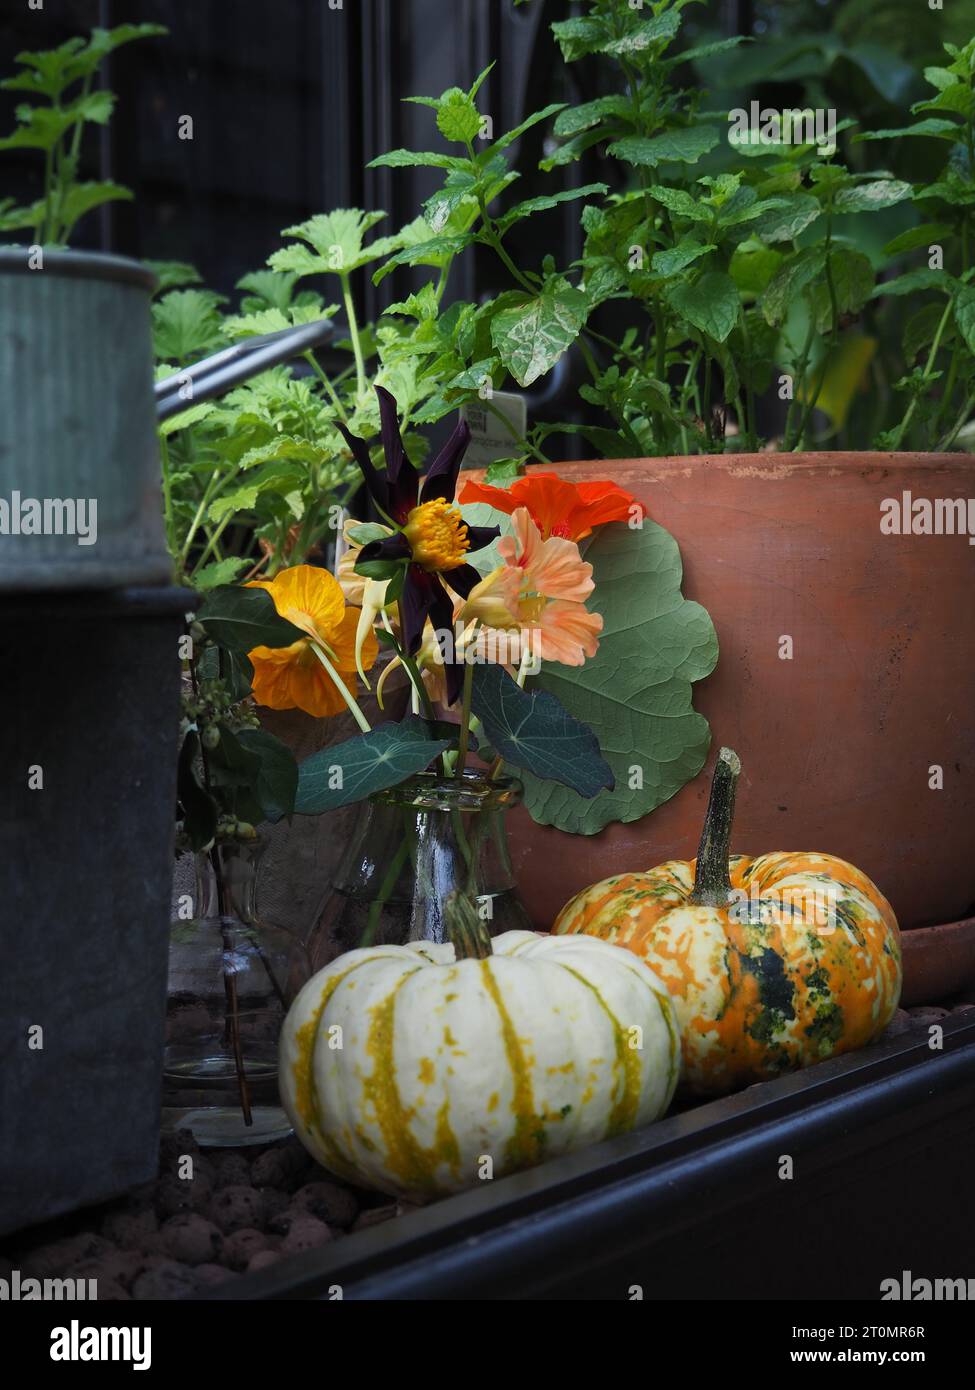 An autumnal scene in a British greenhouse showing cut dahlia and nasturtium flowers and mini ornamental pumpkins Stock Photo